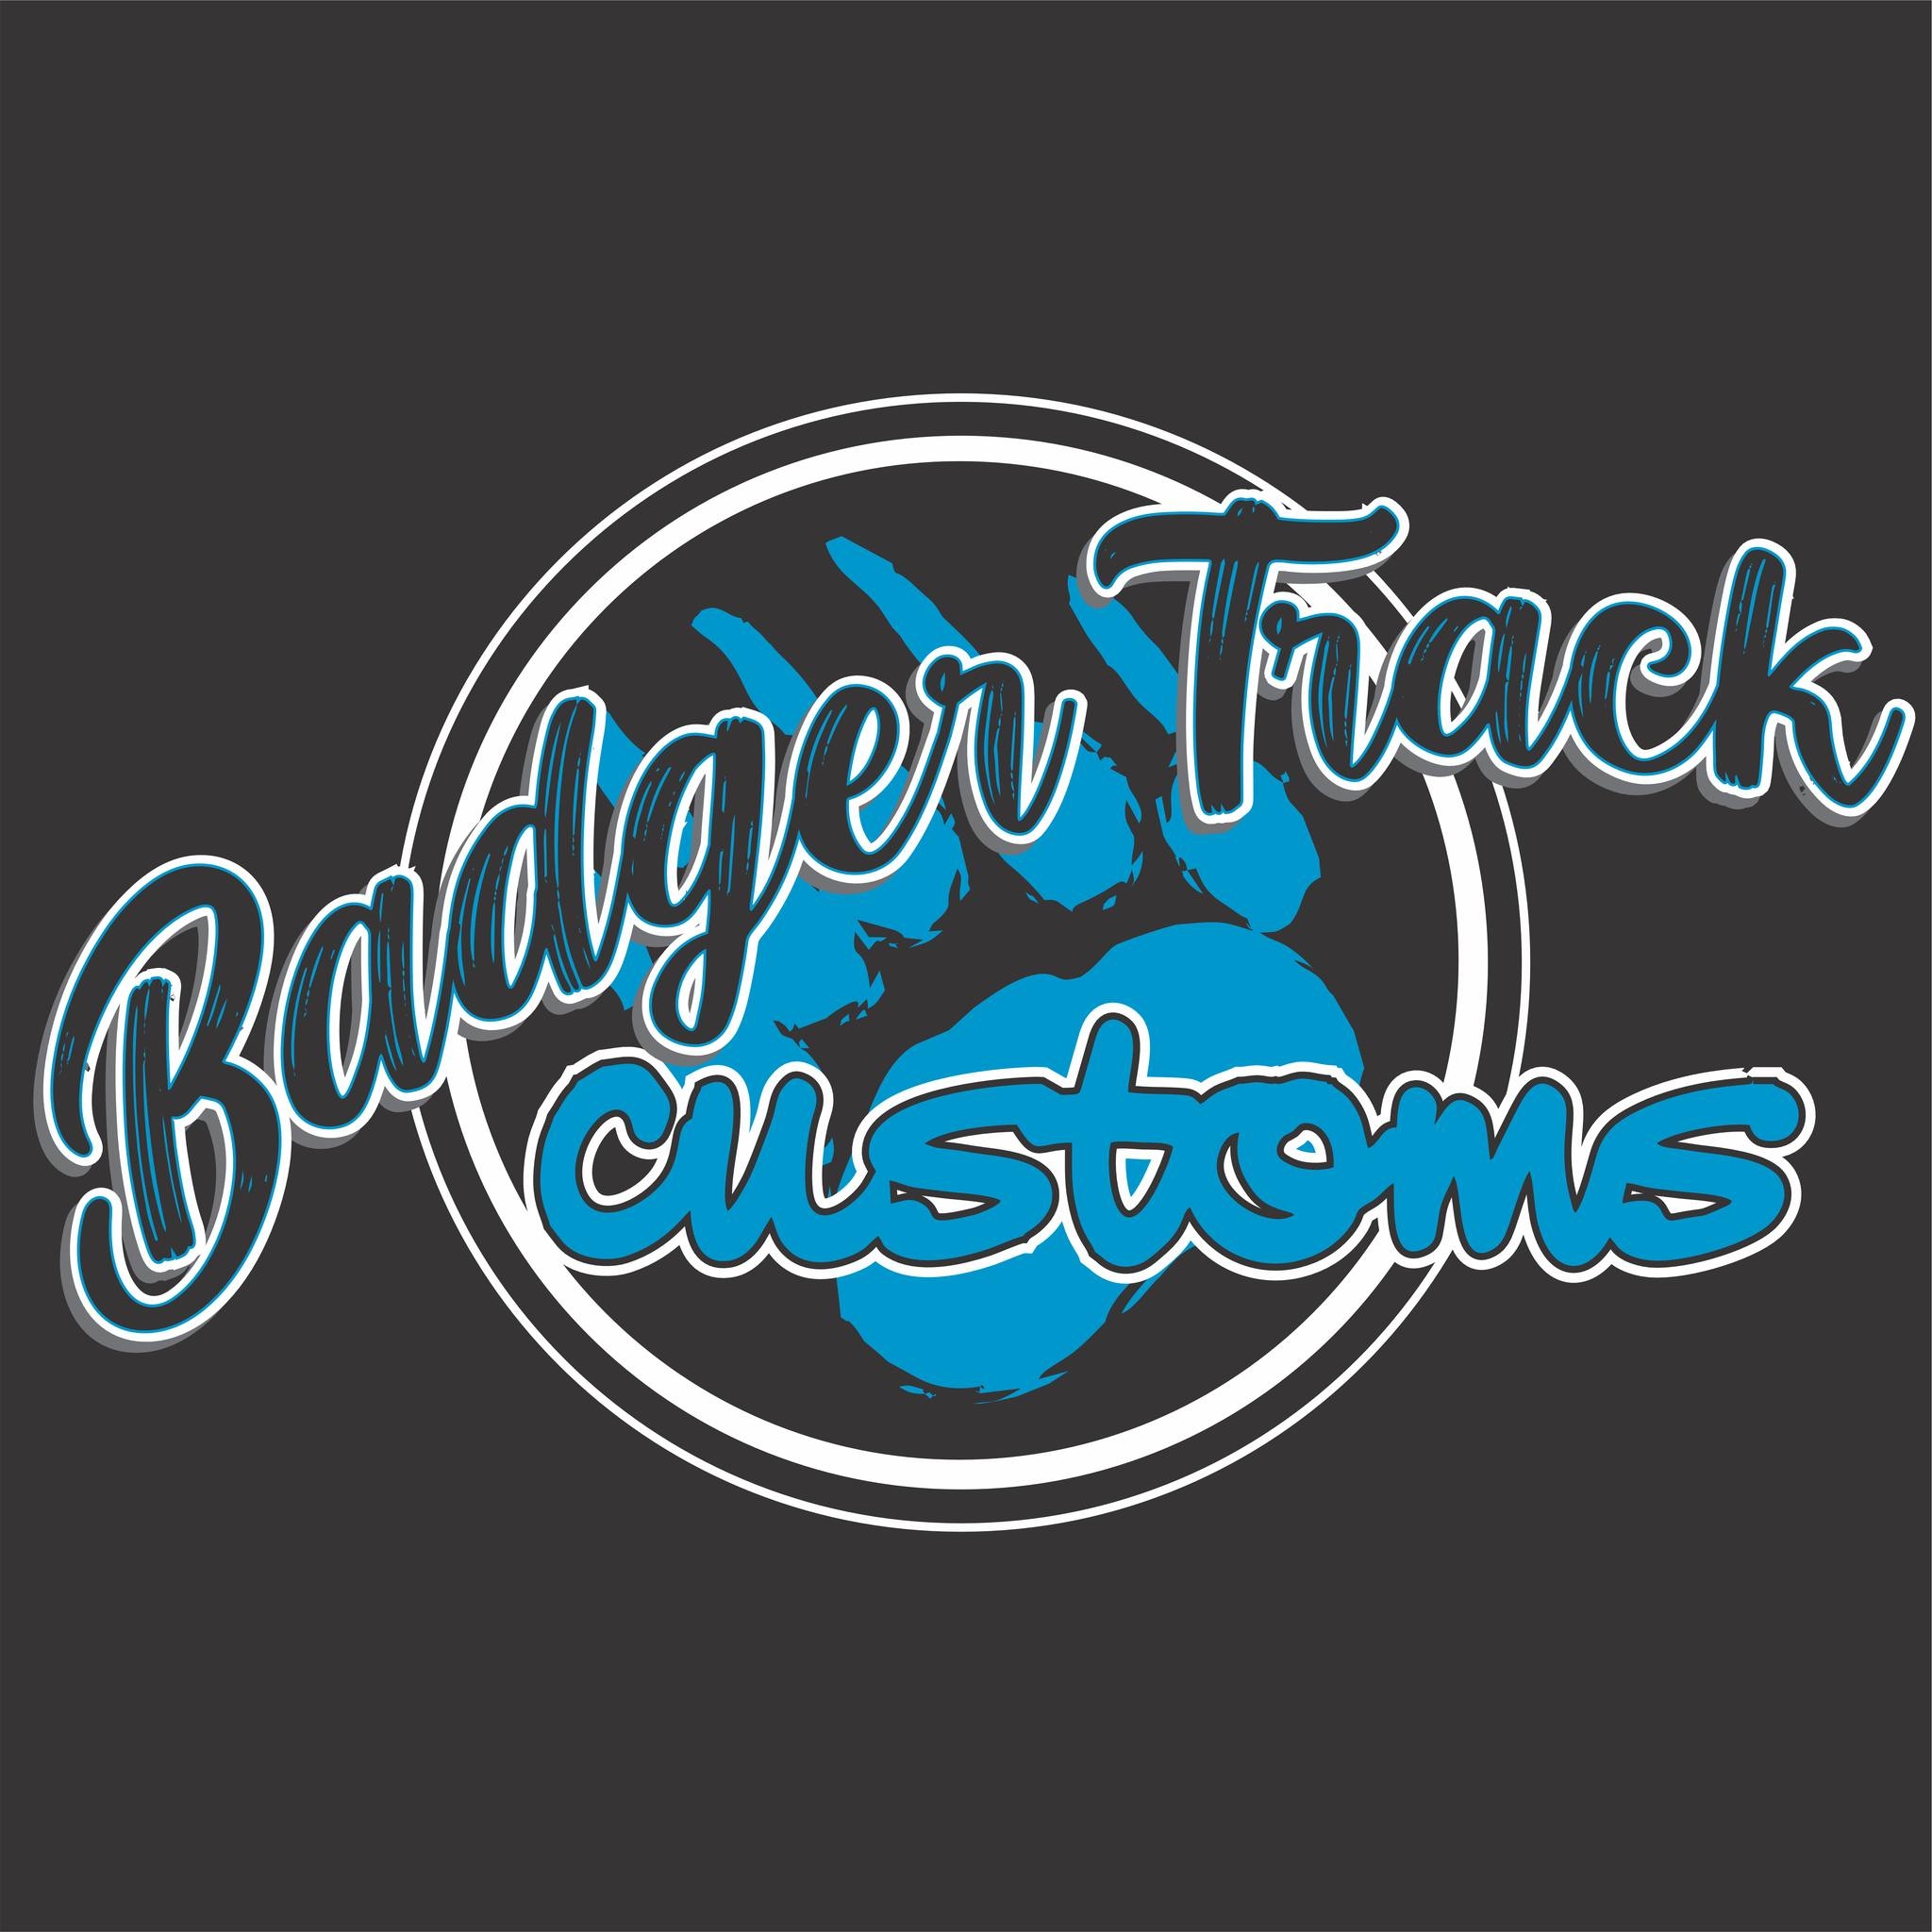 Badger Track Customs